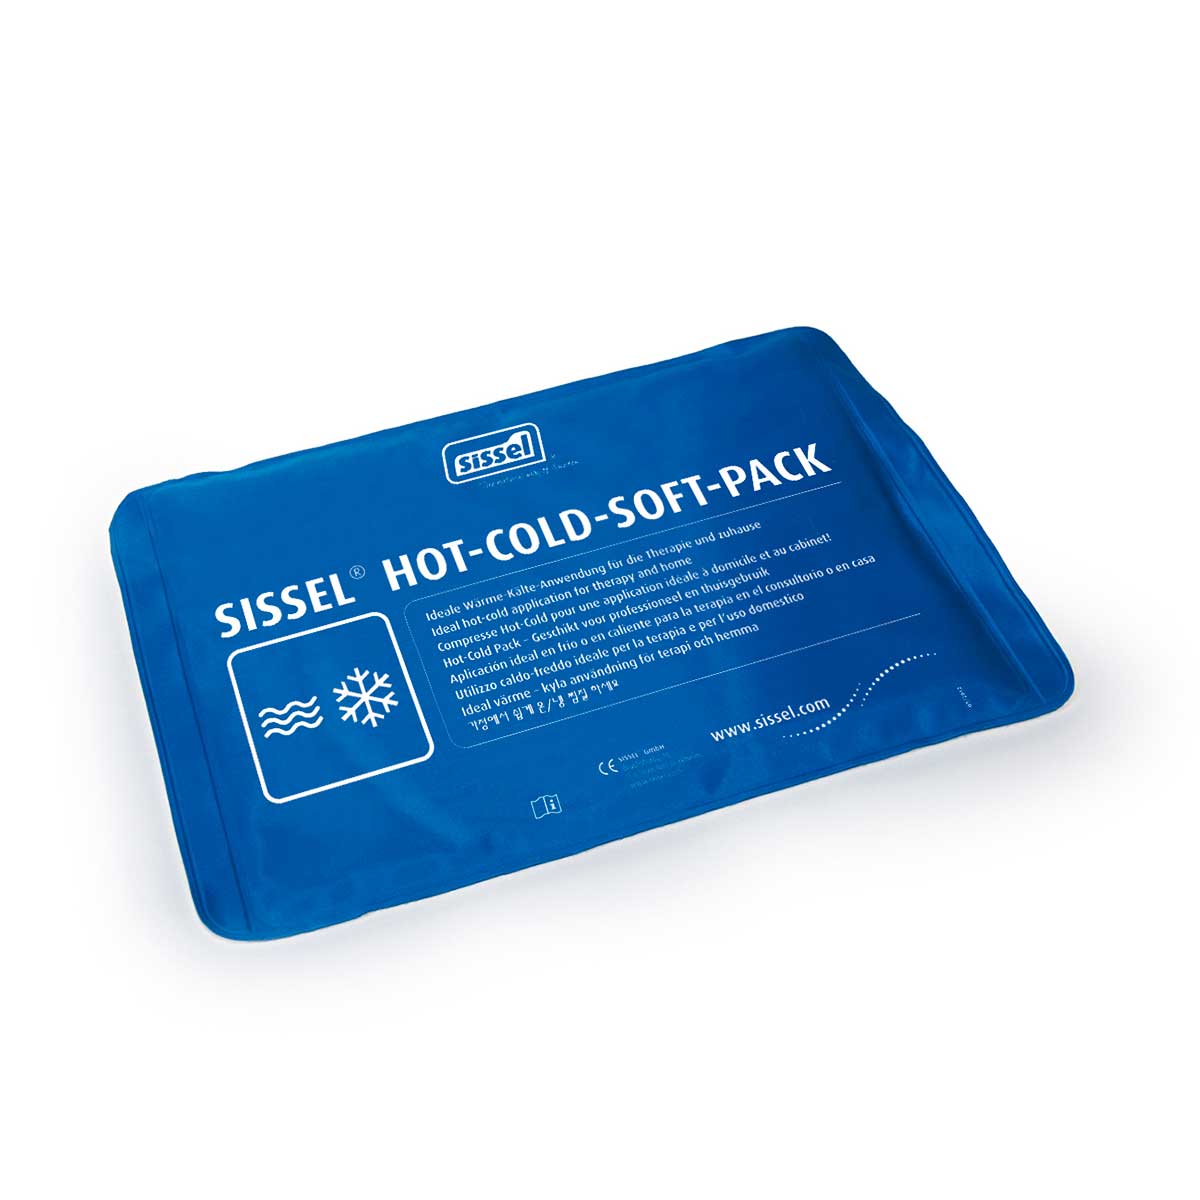 SISSEL Hot-Cold-Soft-Pack